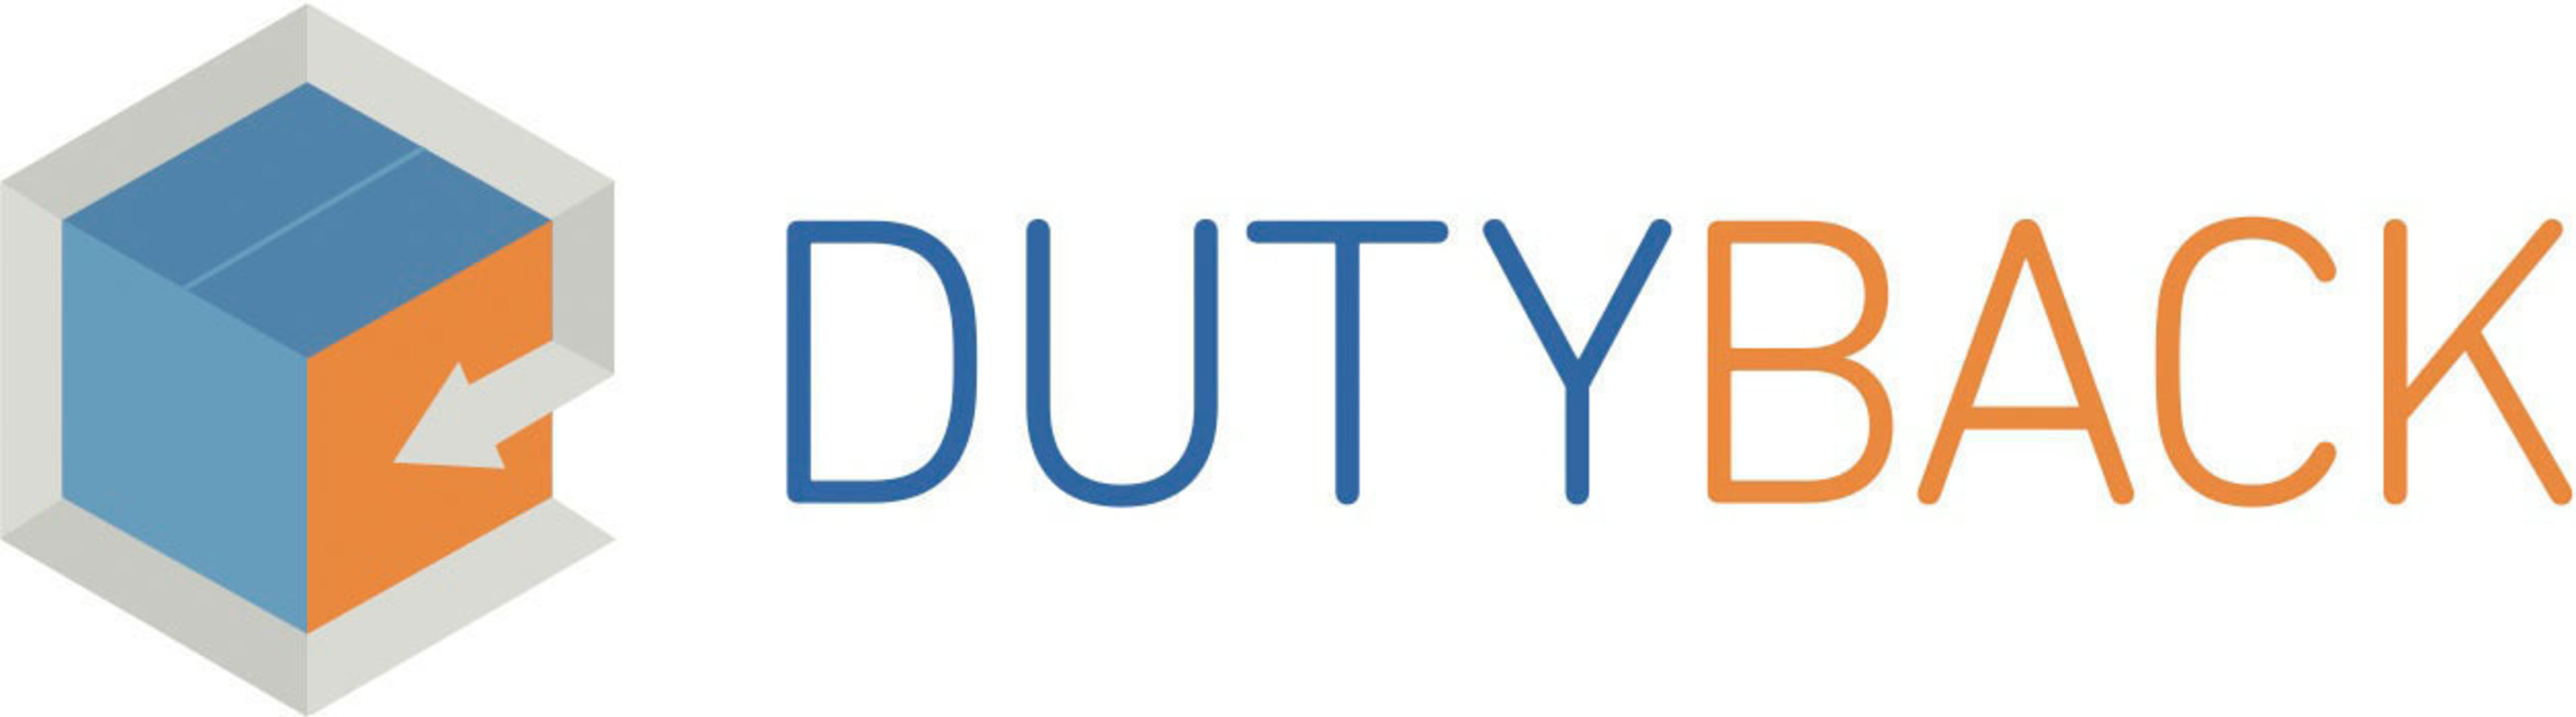 International Businesses Get Duty-Back Refund Solution. (PRNewsFoto/Duty-Back Refund Solutions Inc.) (PRNewsFoto/DUTY-BACK REFUND SOLUTIONS INC.)